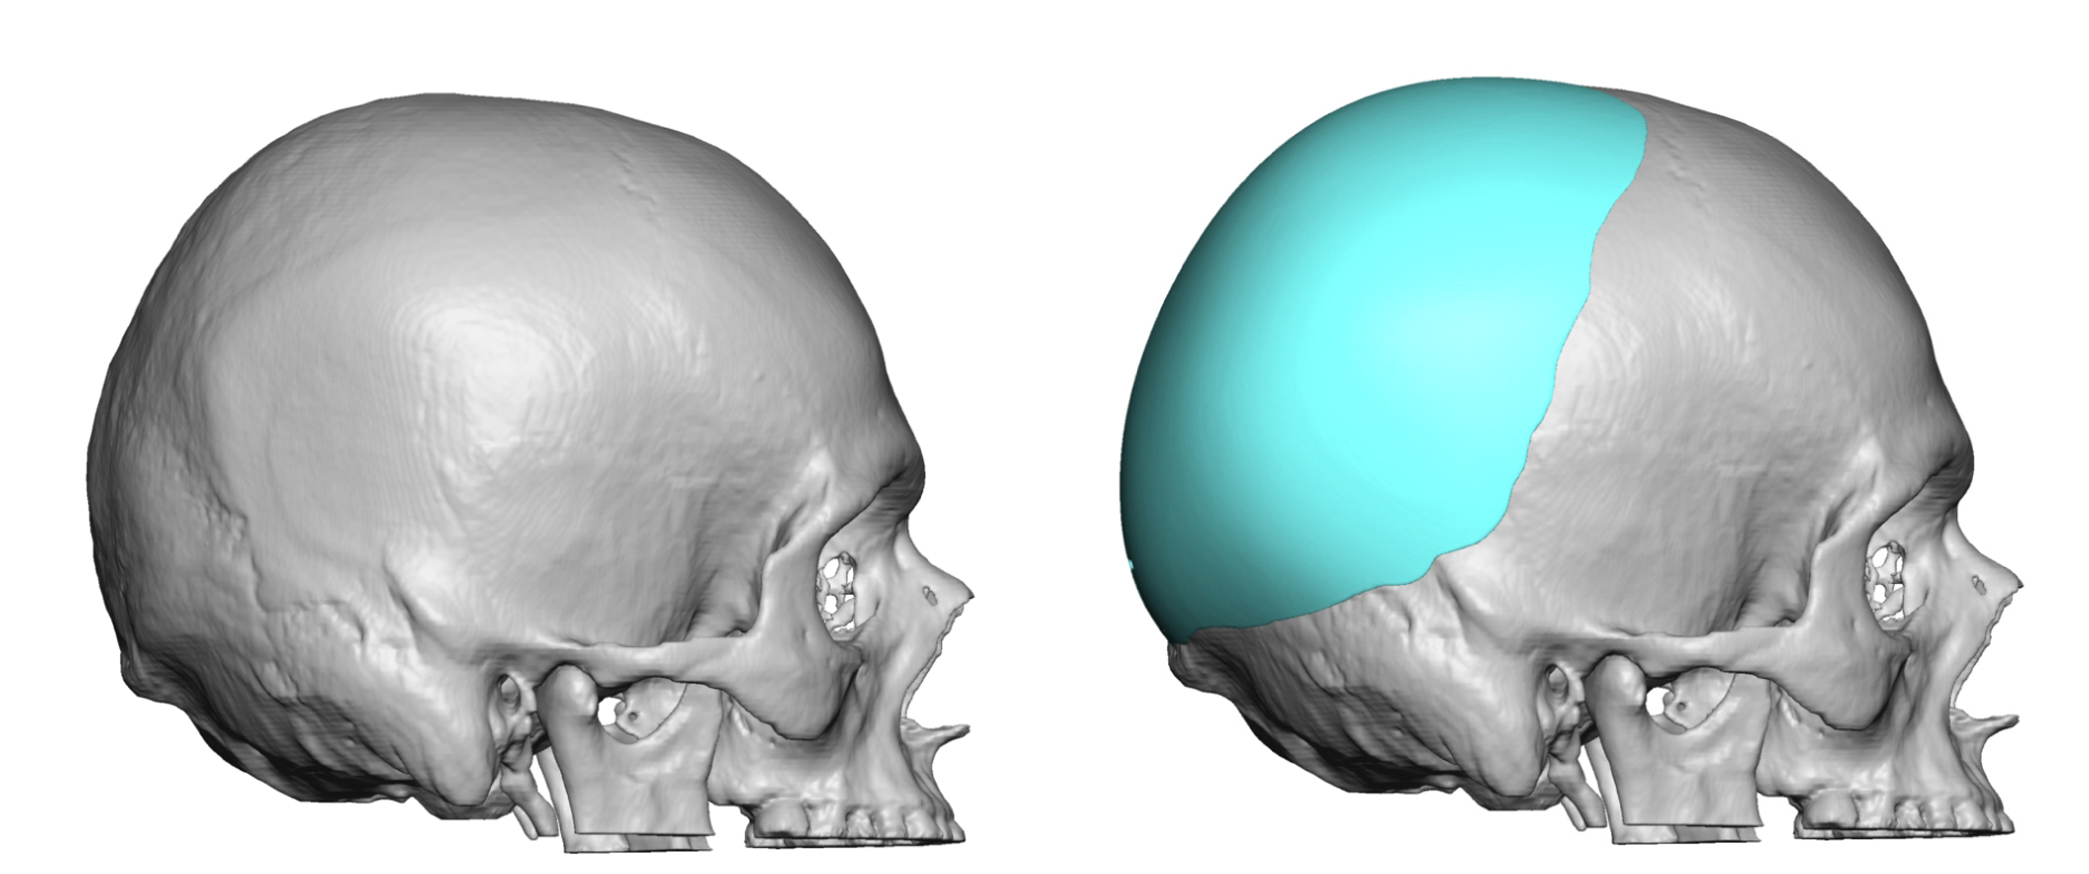 Custom Skull Implant Design For Occipital Asymmetry Right Side View Dr